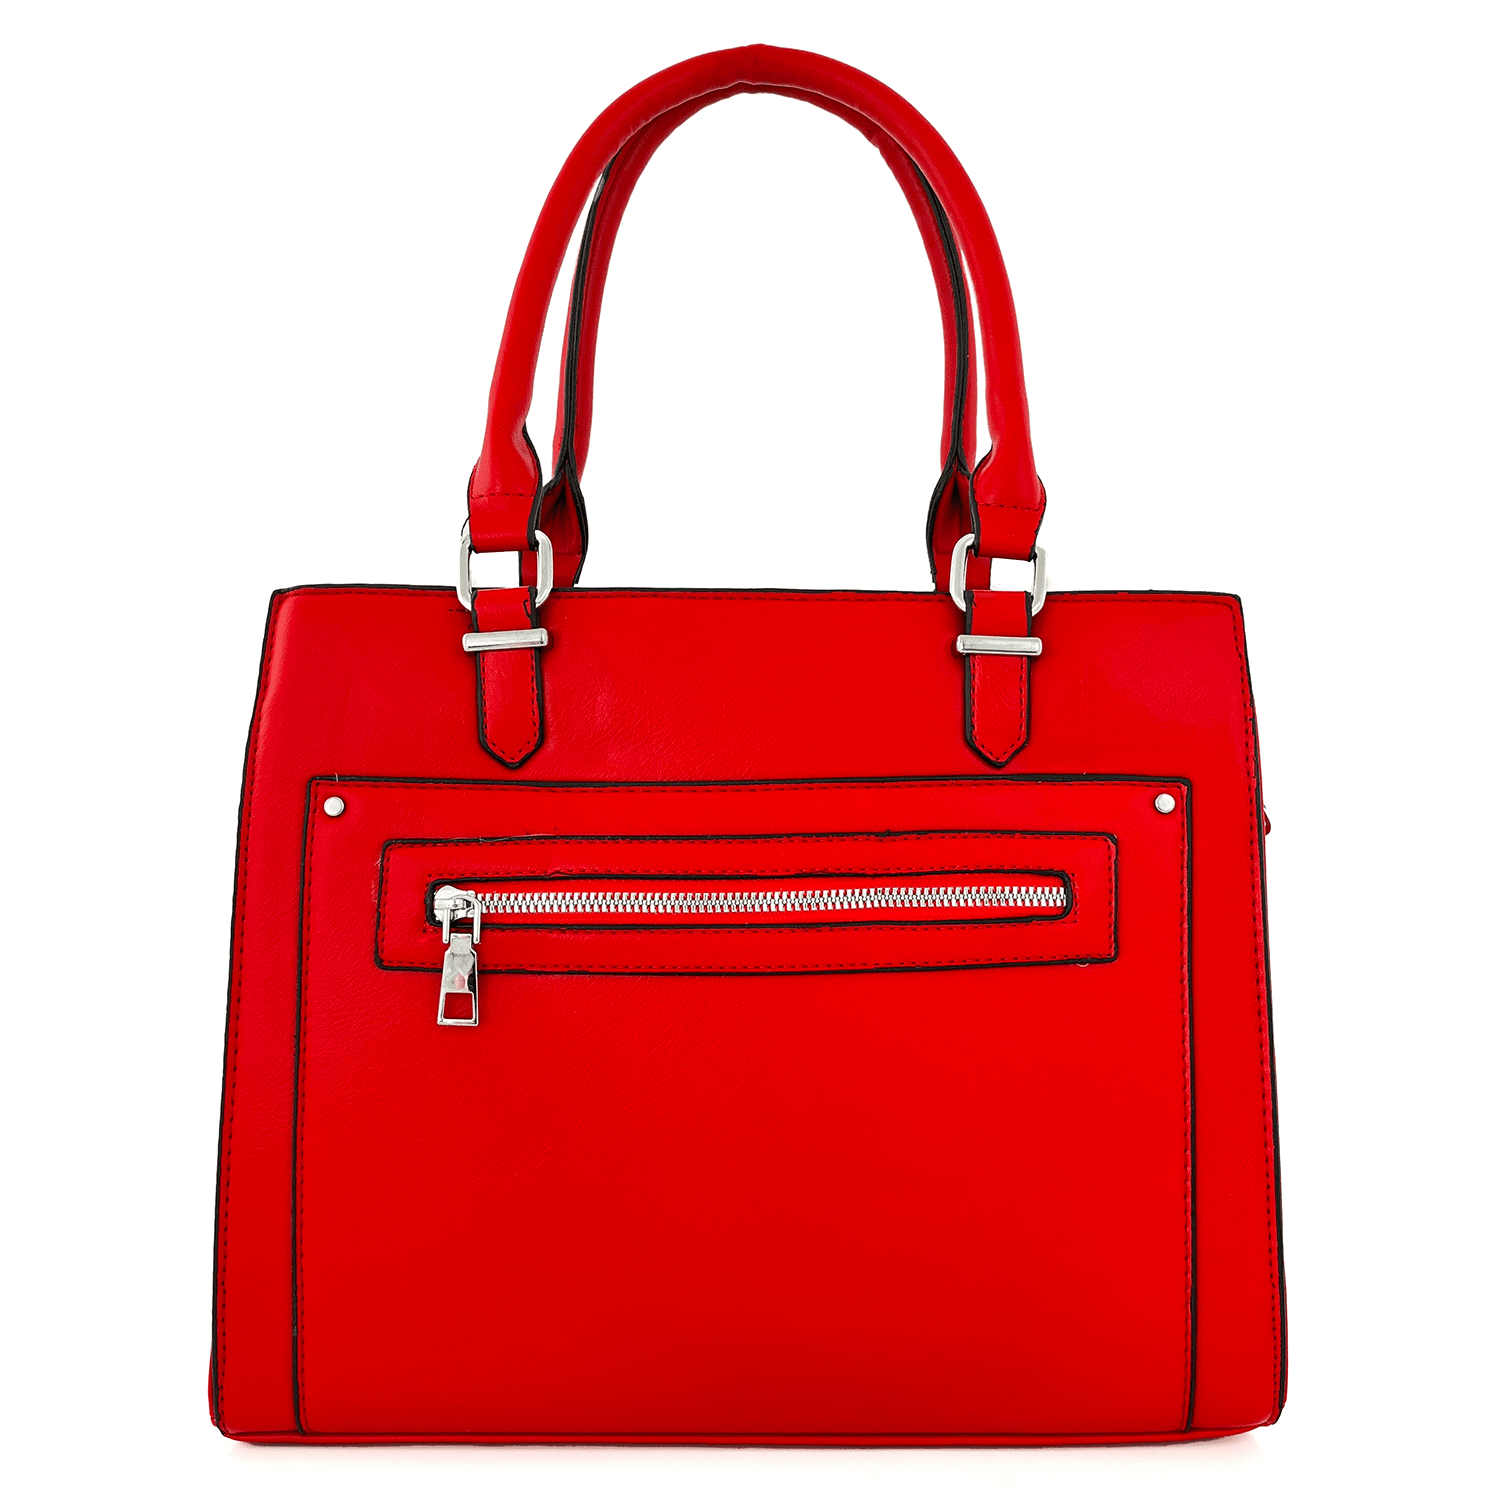 Дамска чанта Alina - червена